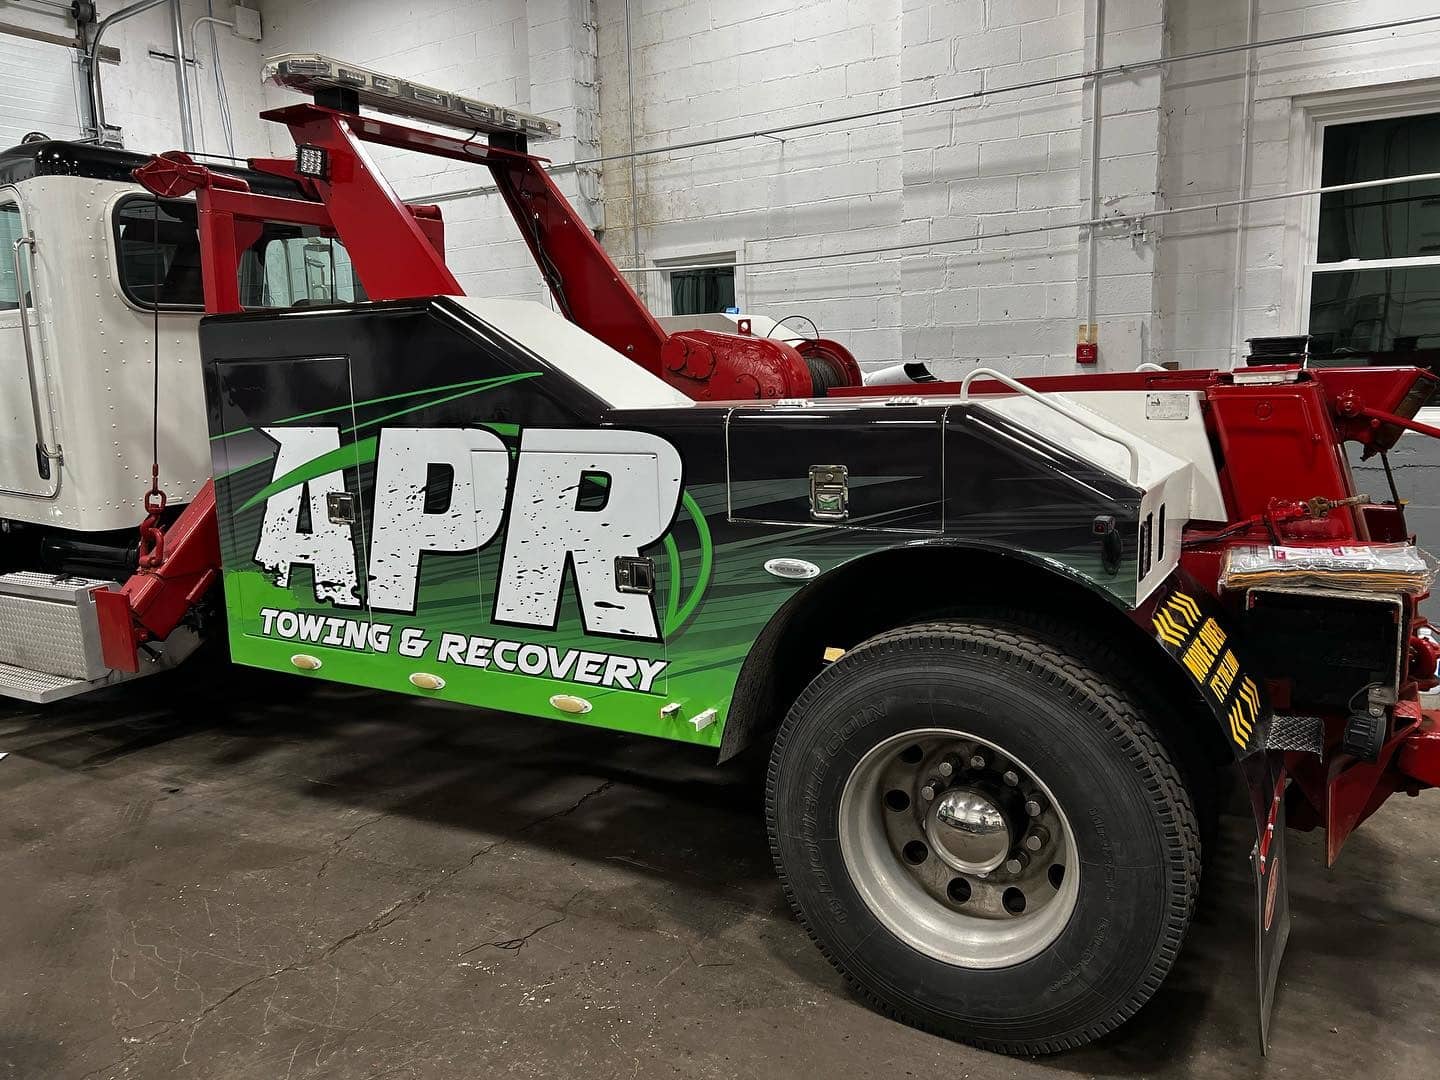 APR Towing & Recovery Ware, Sturbridge, Massachusetts